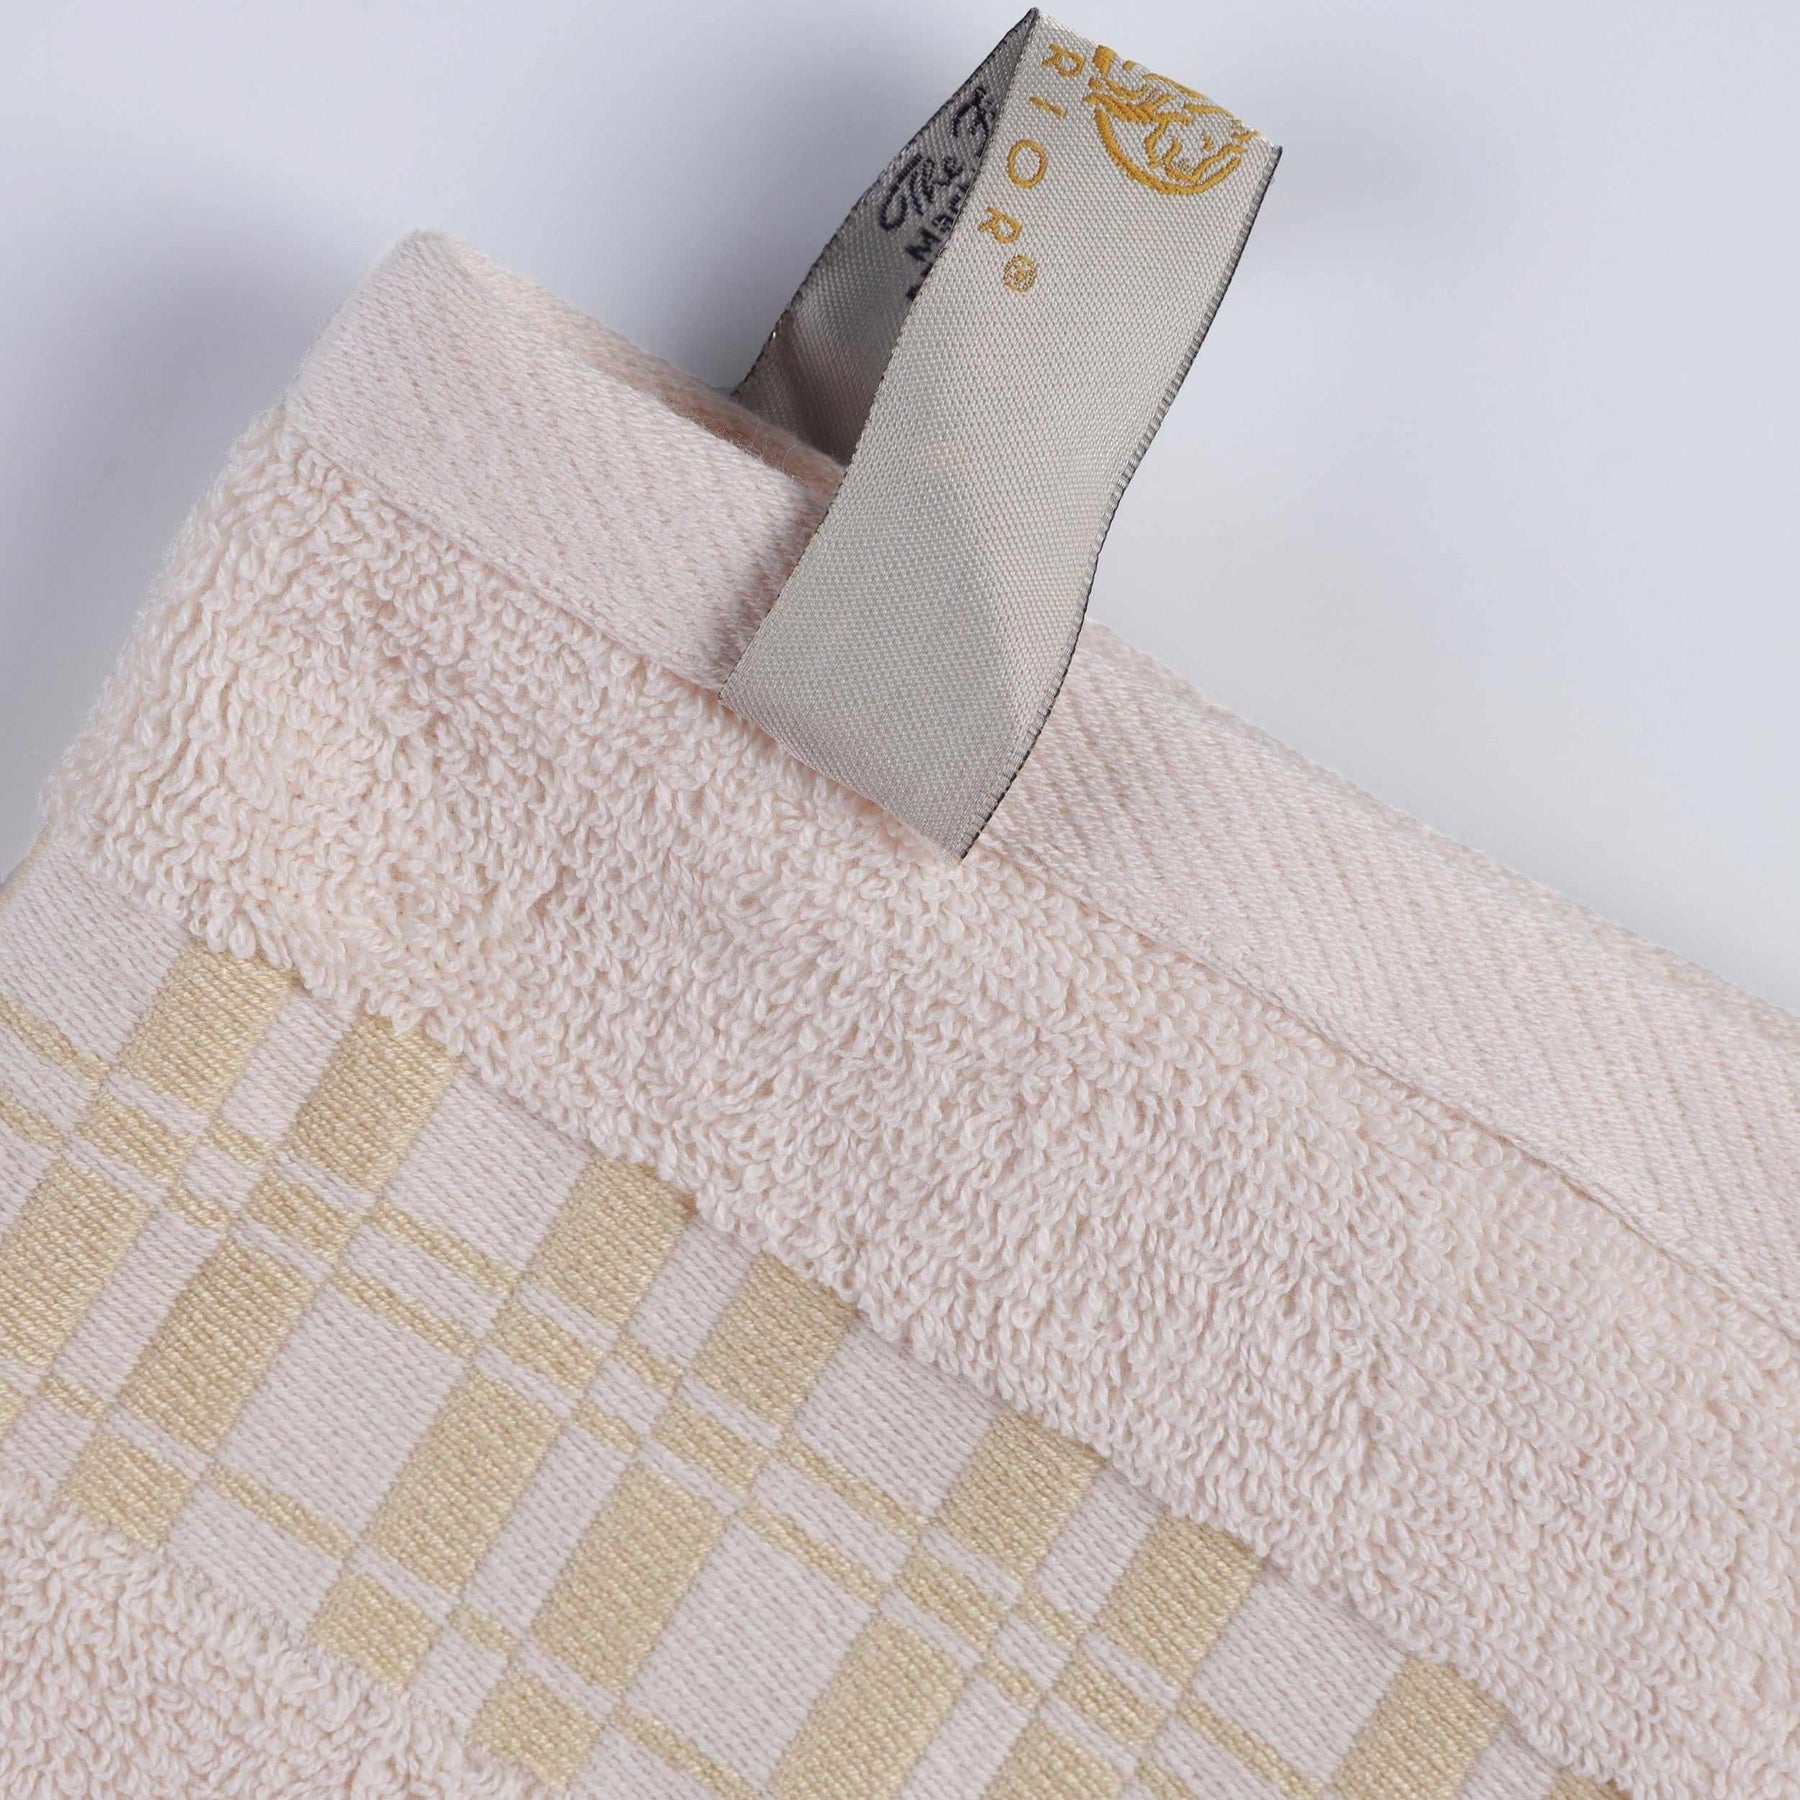 Larissa Geometric Embroidered Cotton 4 Piece Bath Towel Set - Bath Towel by Superior - Superior 